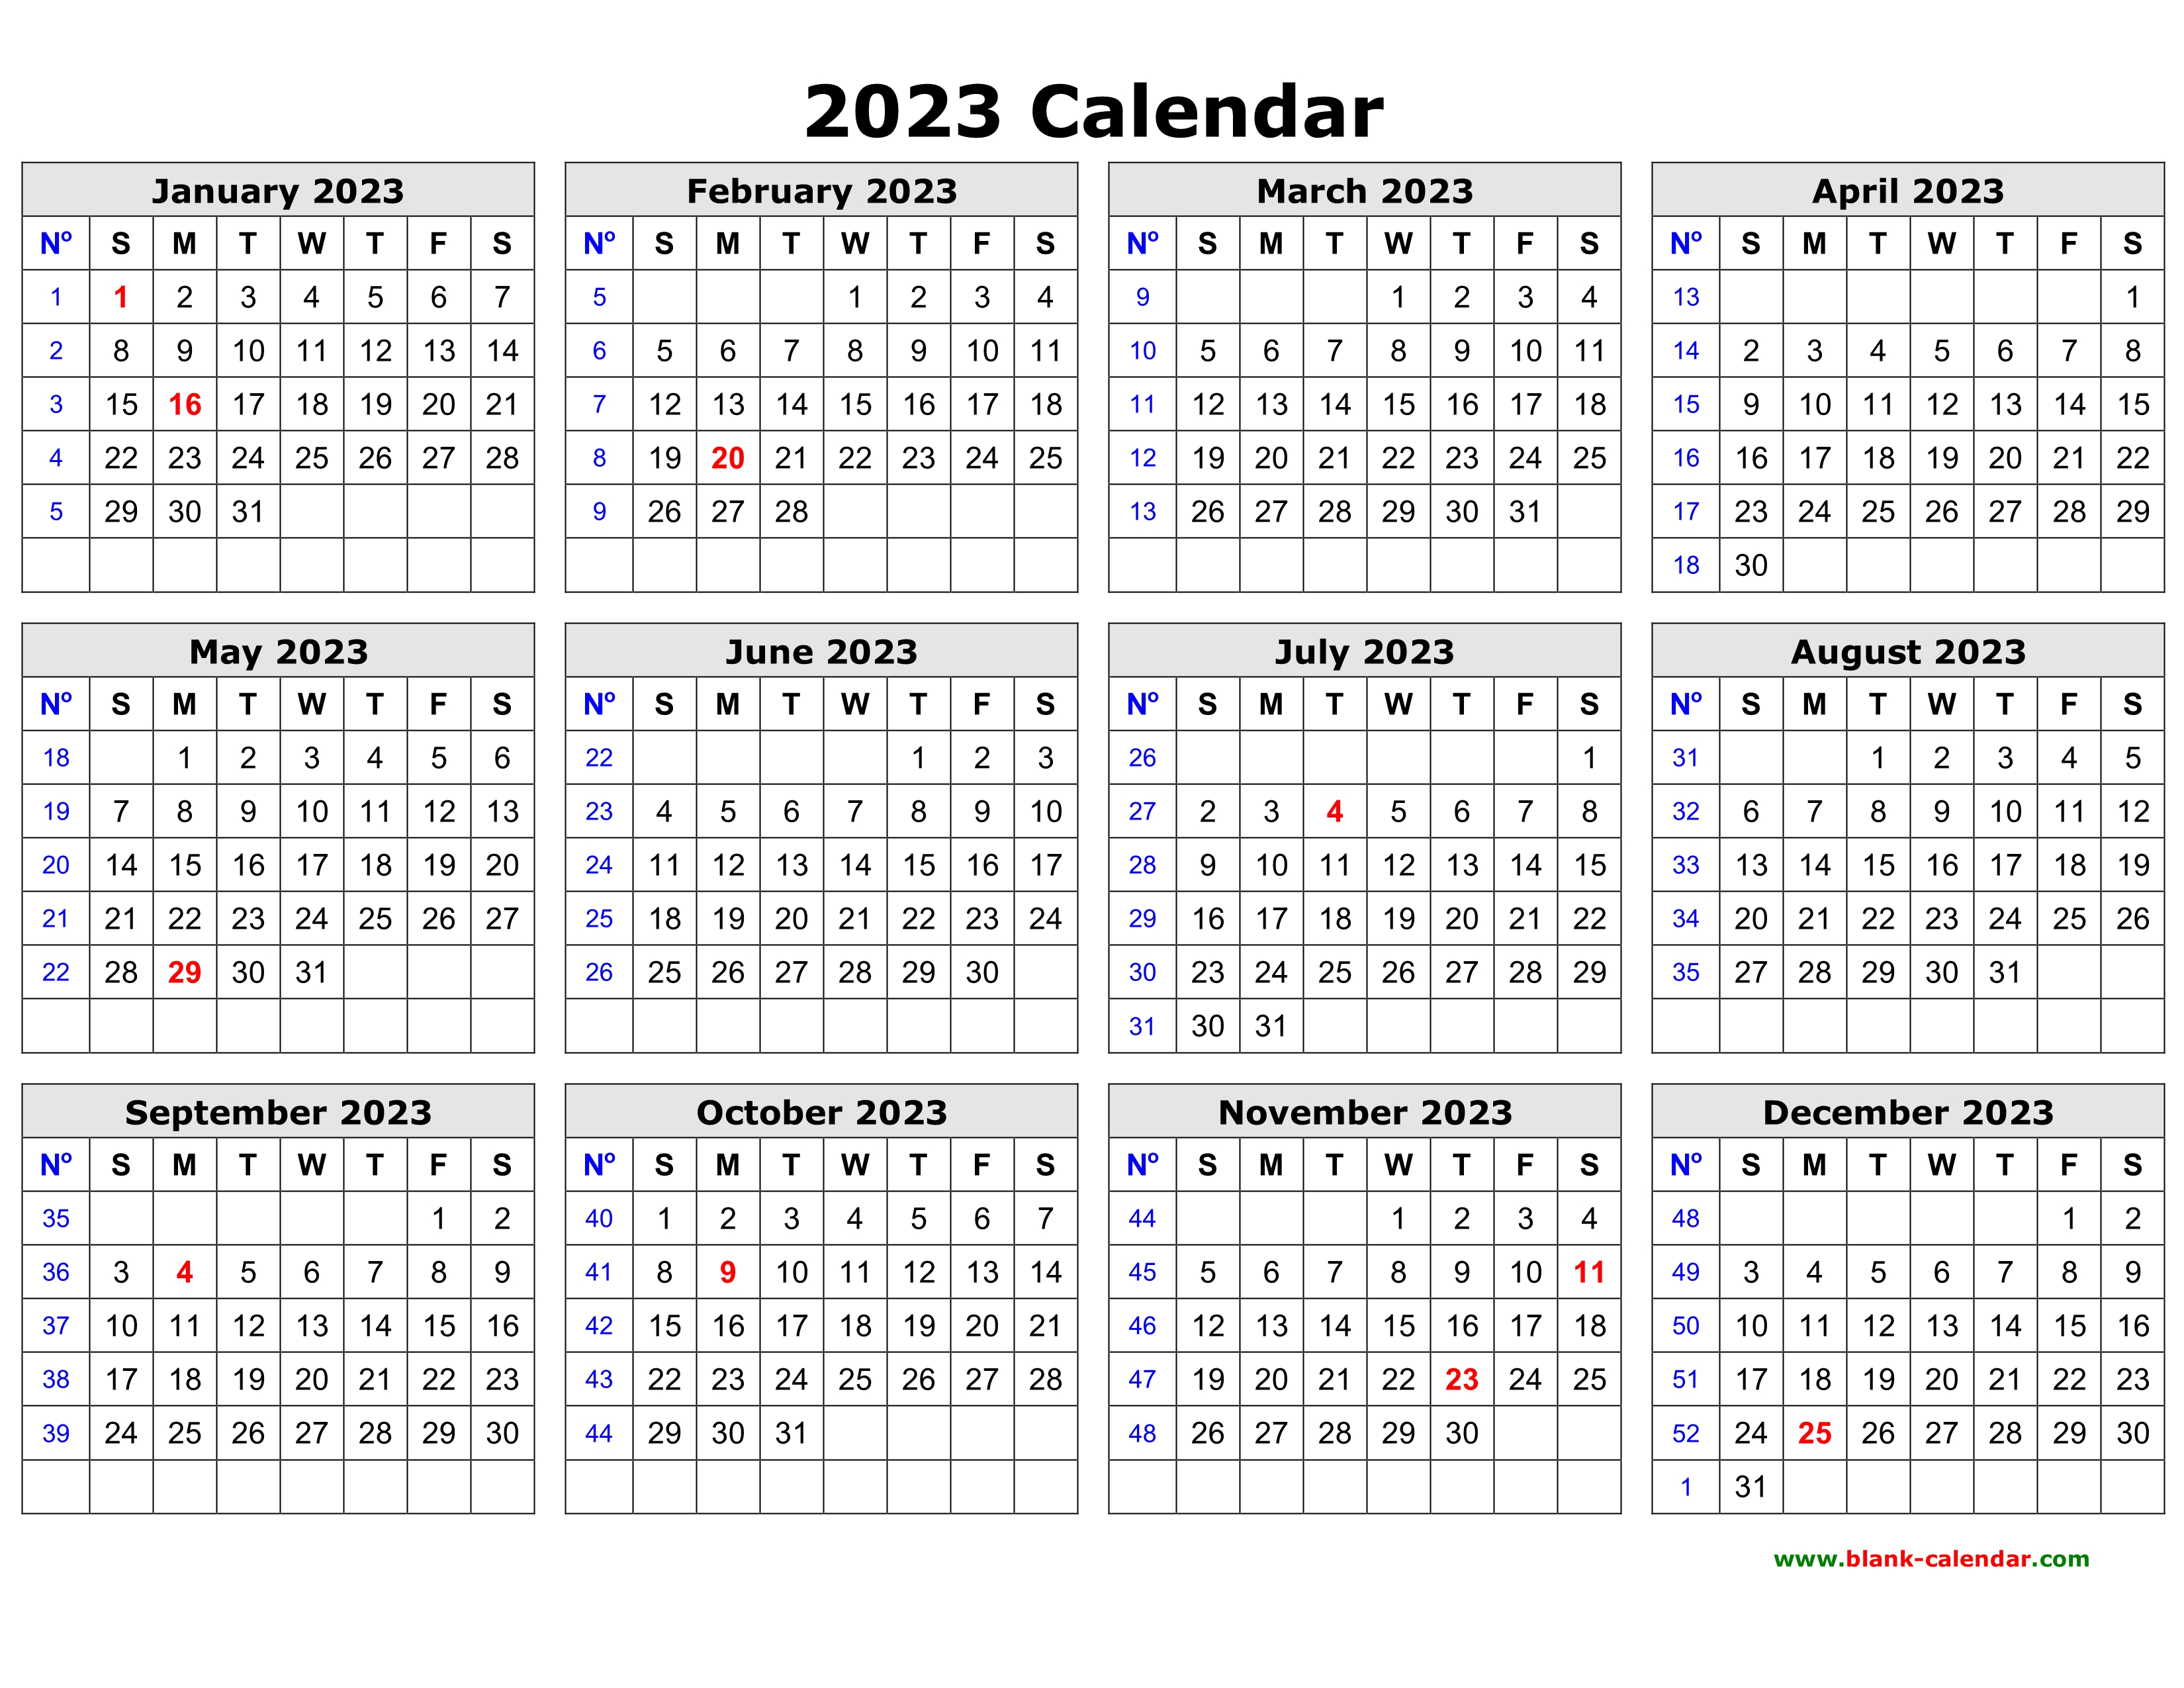 cua-fall-2023-calendar-martin-printable-calendars